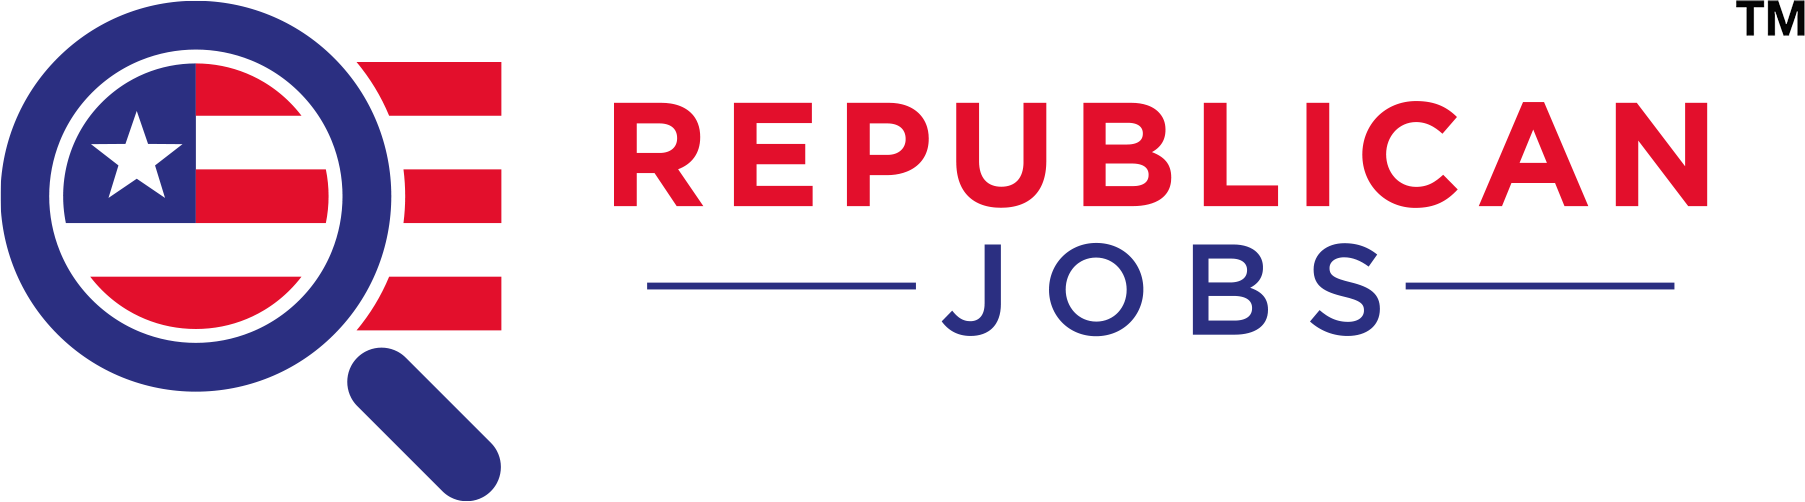 Republican jobs in Braintree Massachusetts jobs